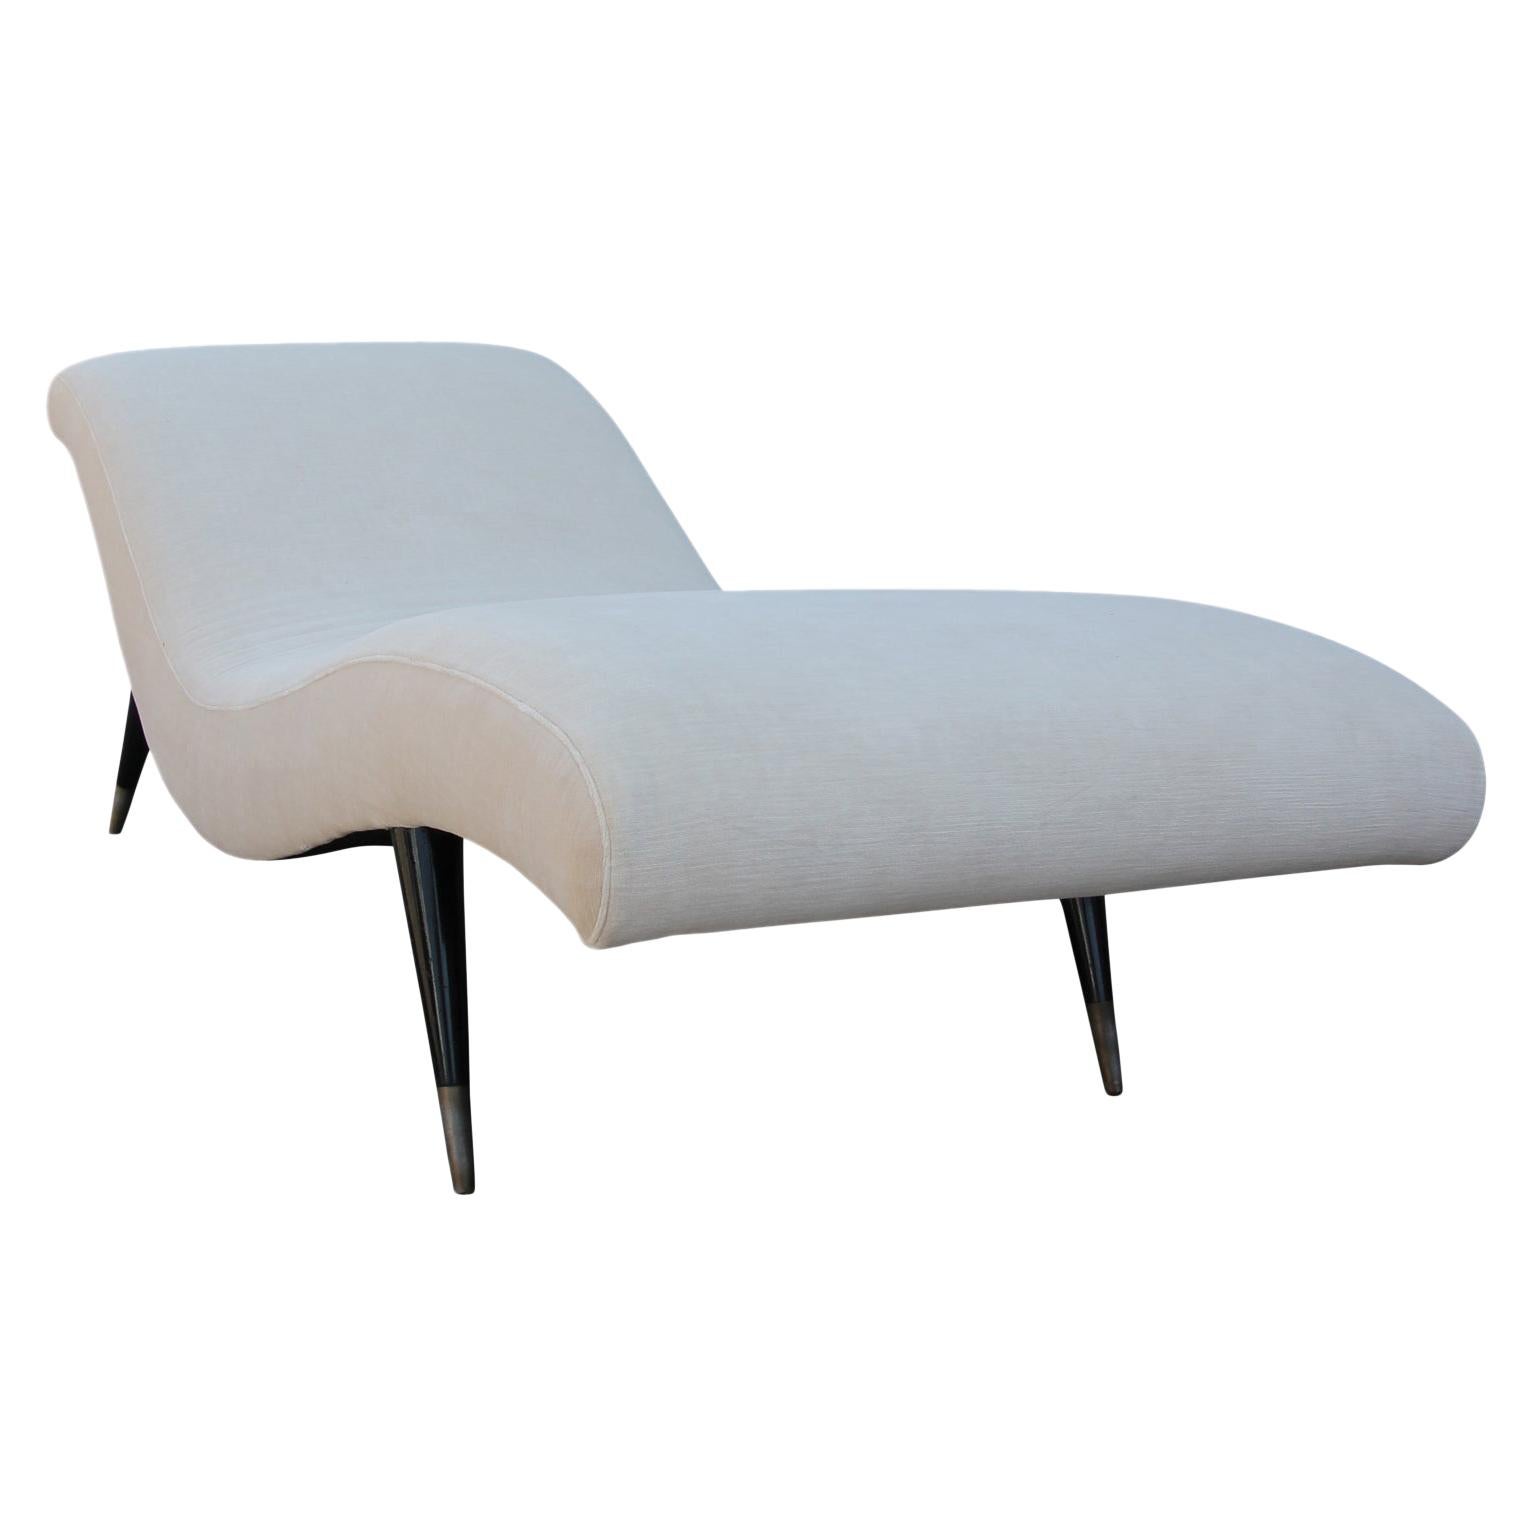 Sculptural Modern Chaise Lounge